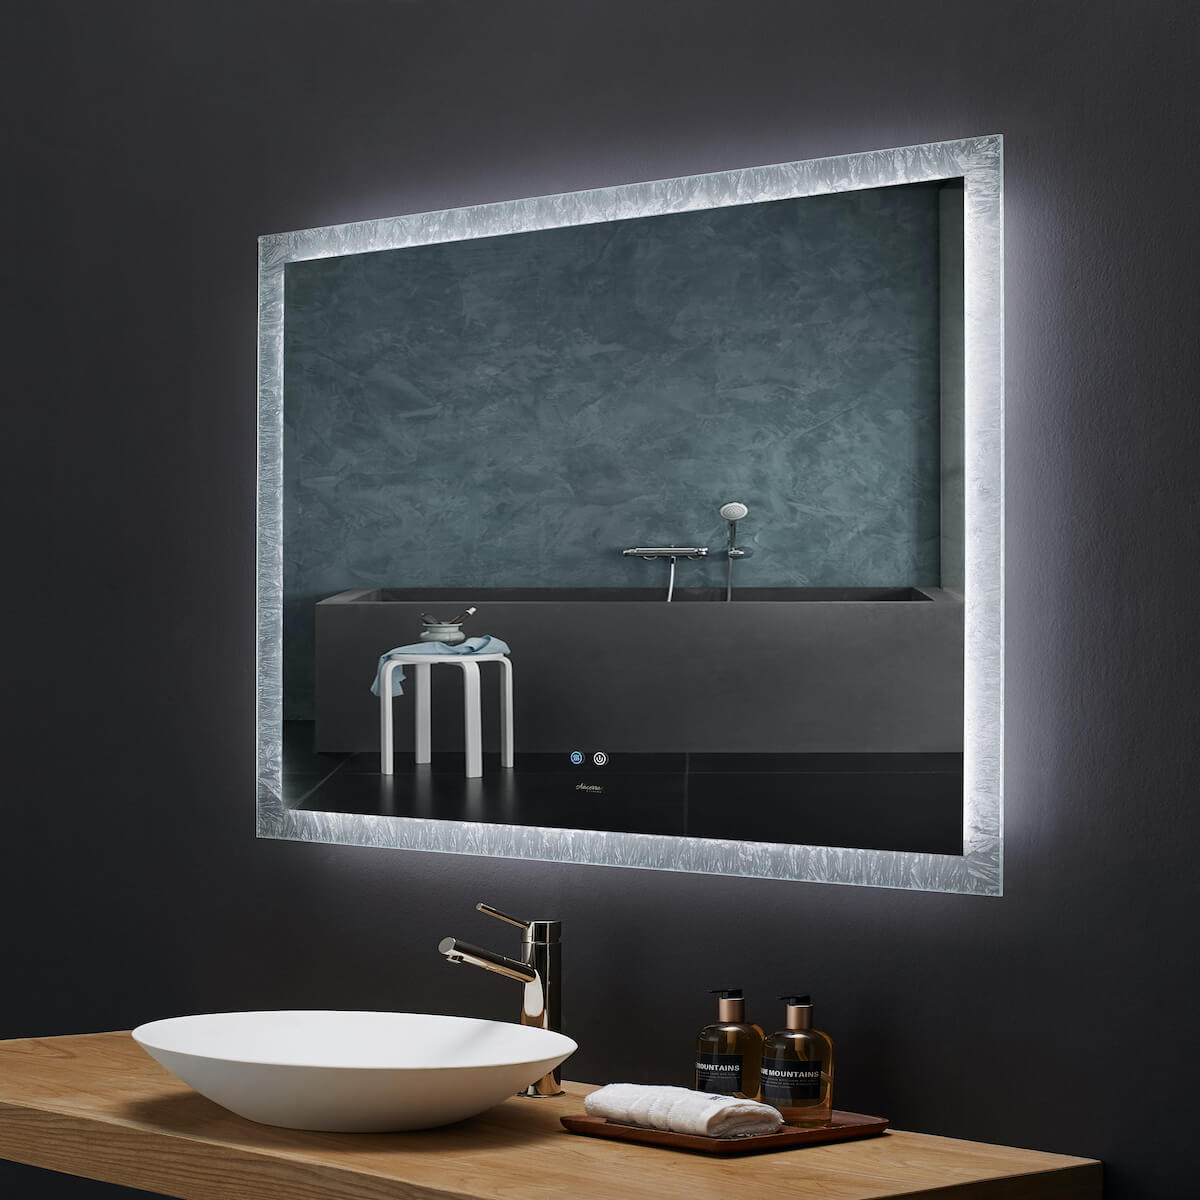 Ancerre Designs 48" LED Frysta Mirror LEDM-FRYSTA-48 Angle